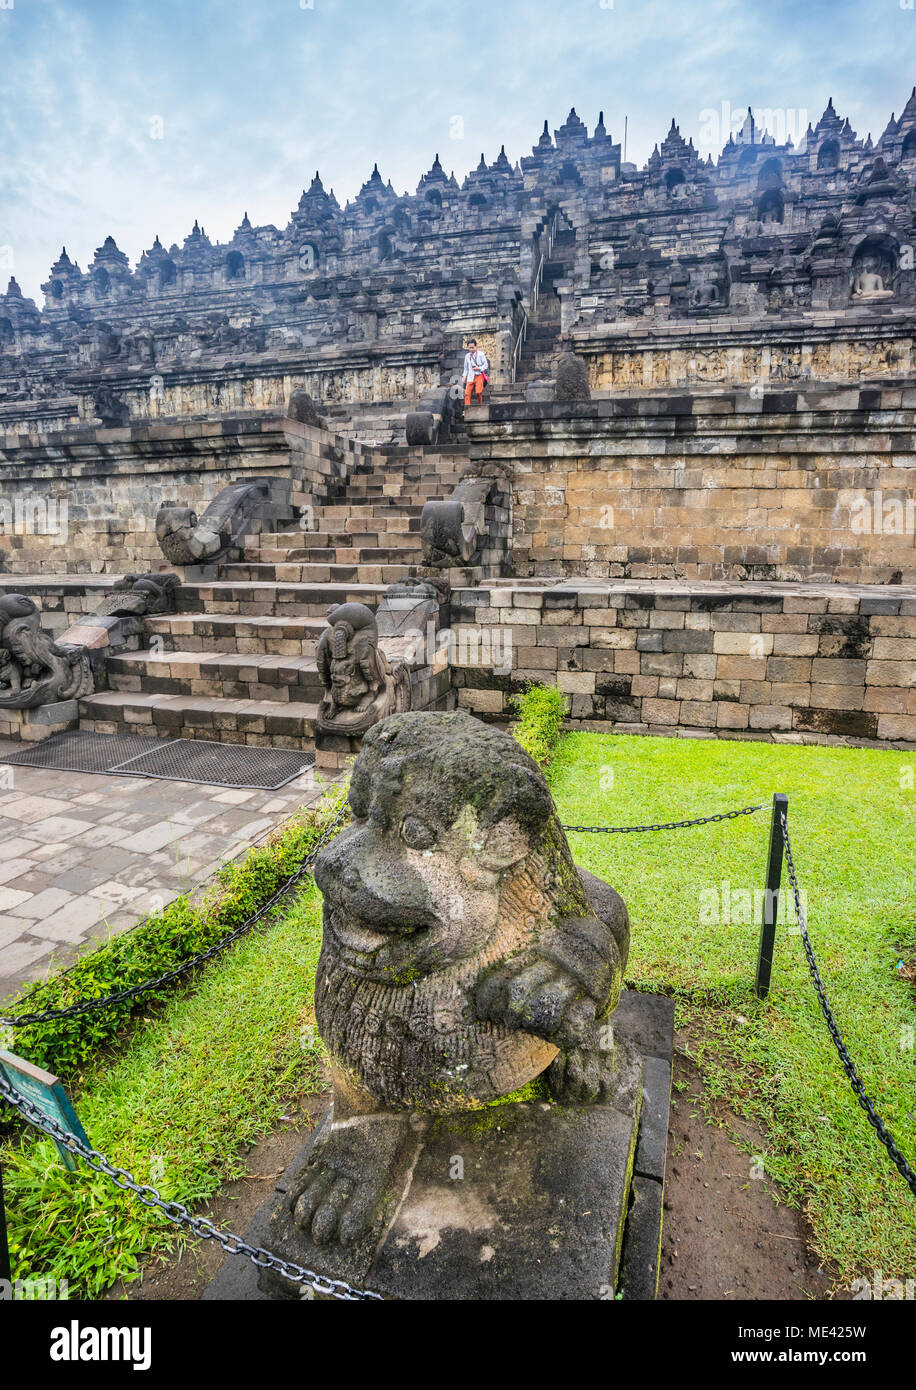 lion statues guard the ascend of the 9th century Borobudur Buddhist temple, Borobudur Archeological Park, Central Java, Indonesia Stock Photo